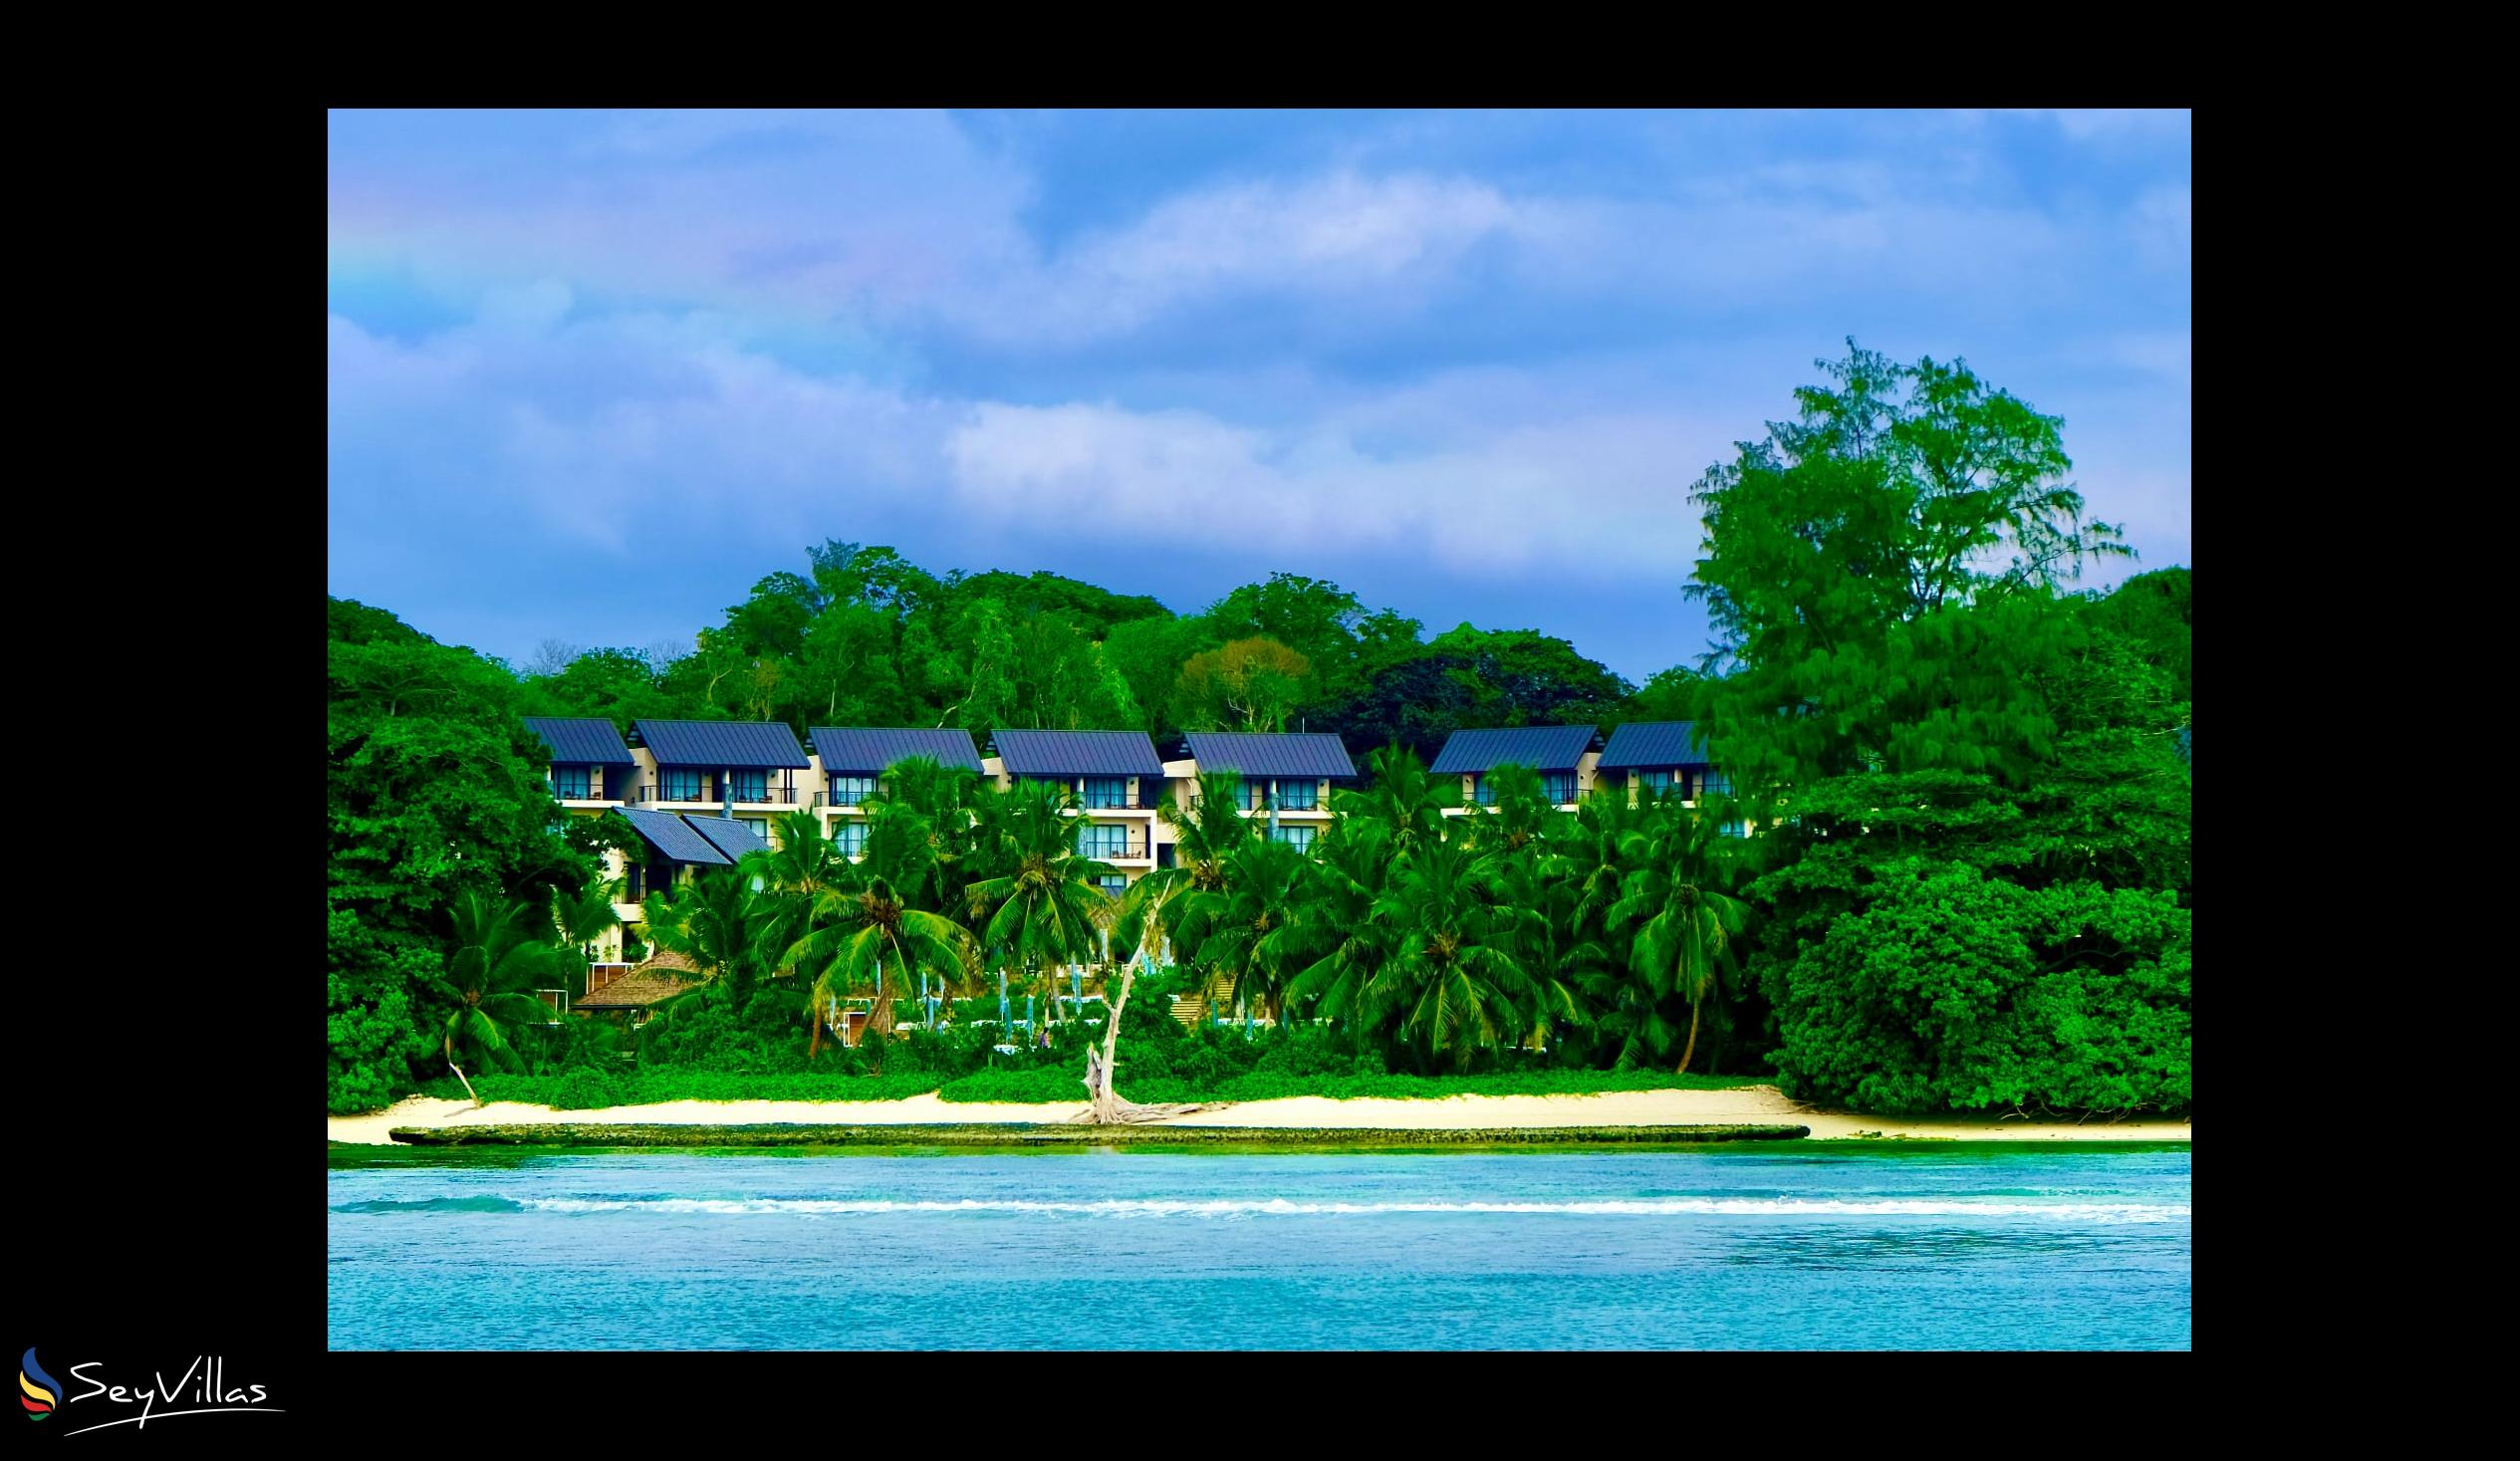 Foto 4: Club Med Seychelles - Esterno - Saint Anne (Seychelles)